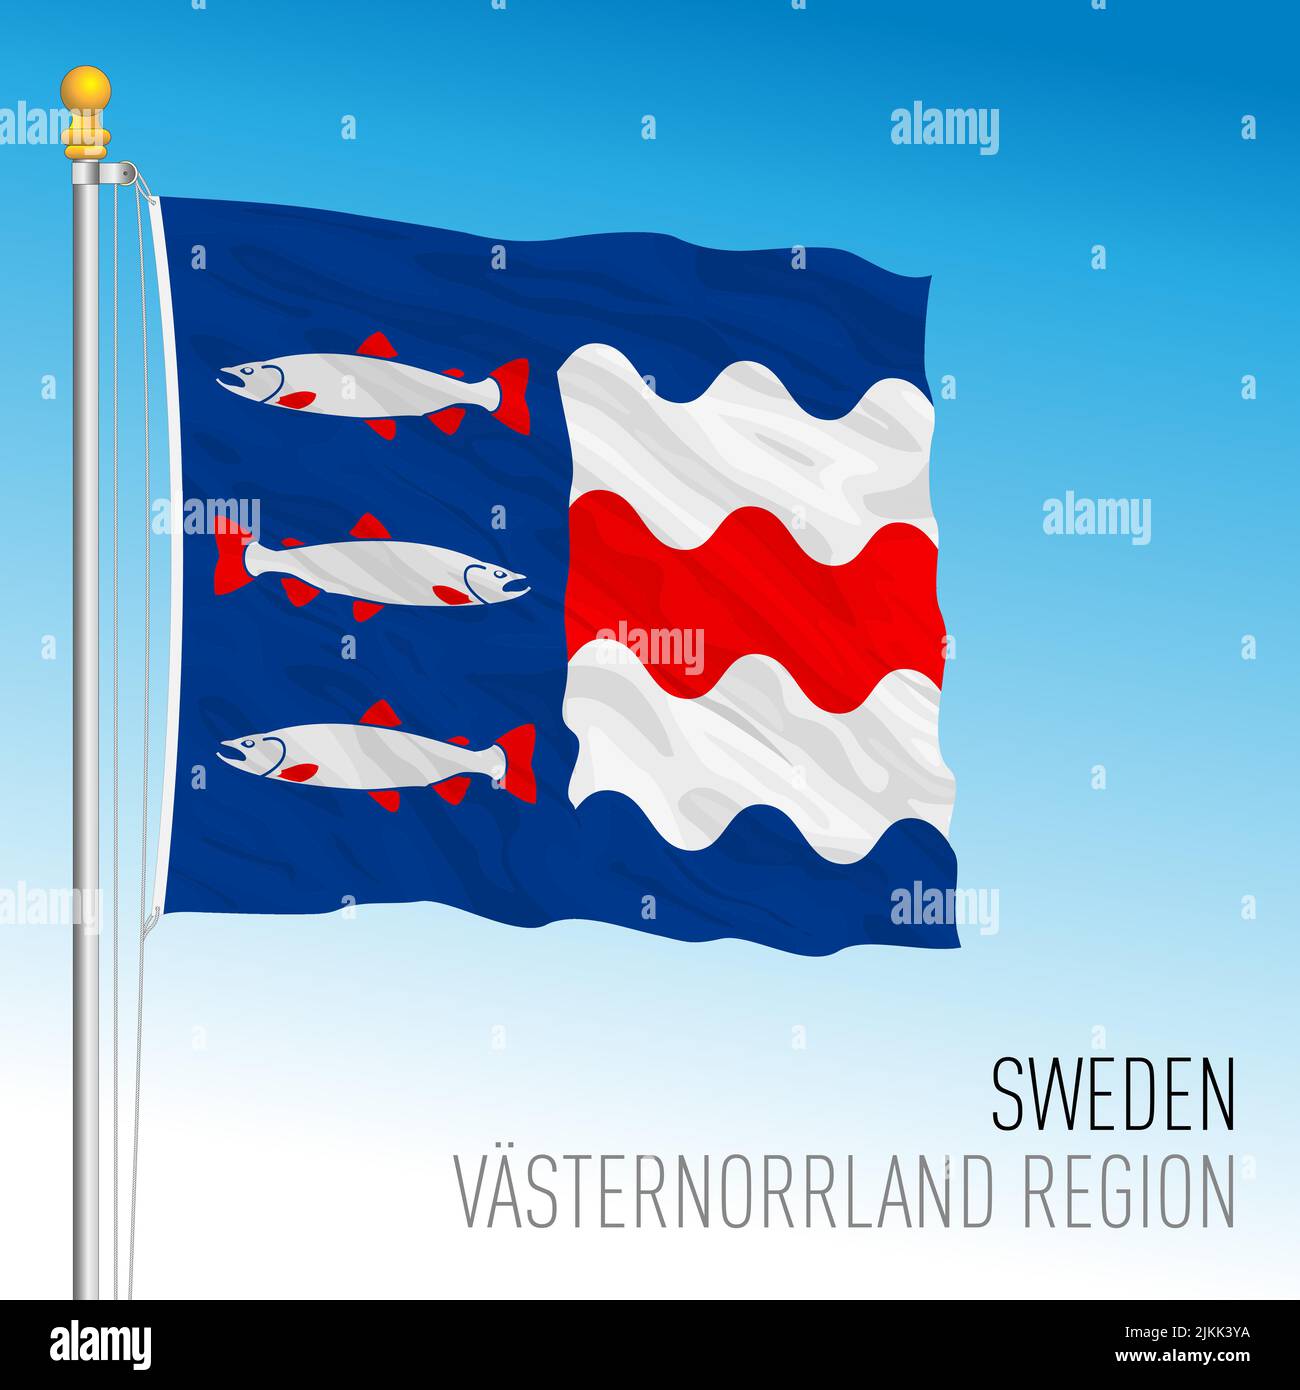 Vasternorrland county regional flag, Kingdom of Sweden, vector illustration Stock Vector